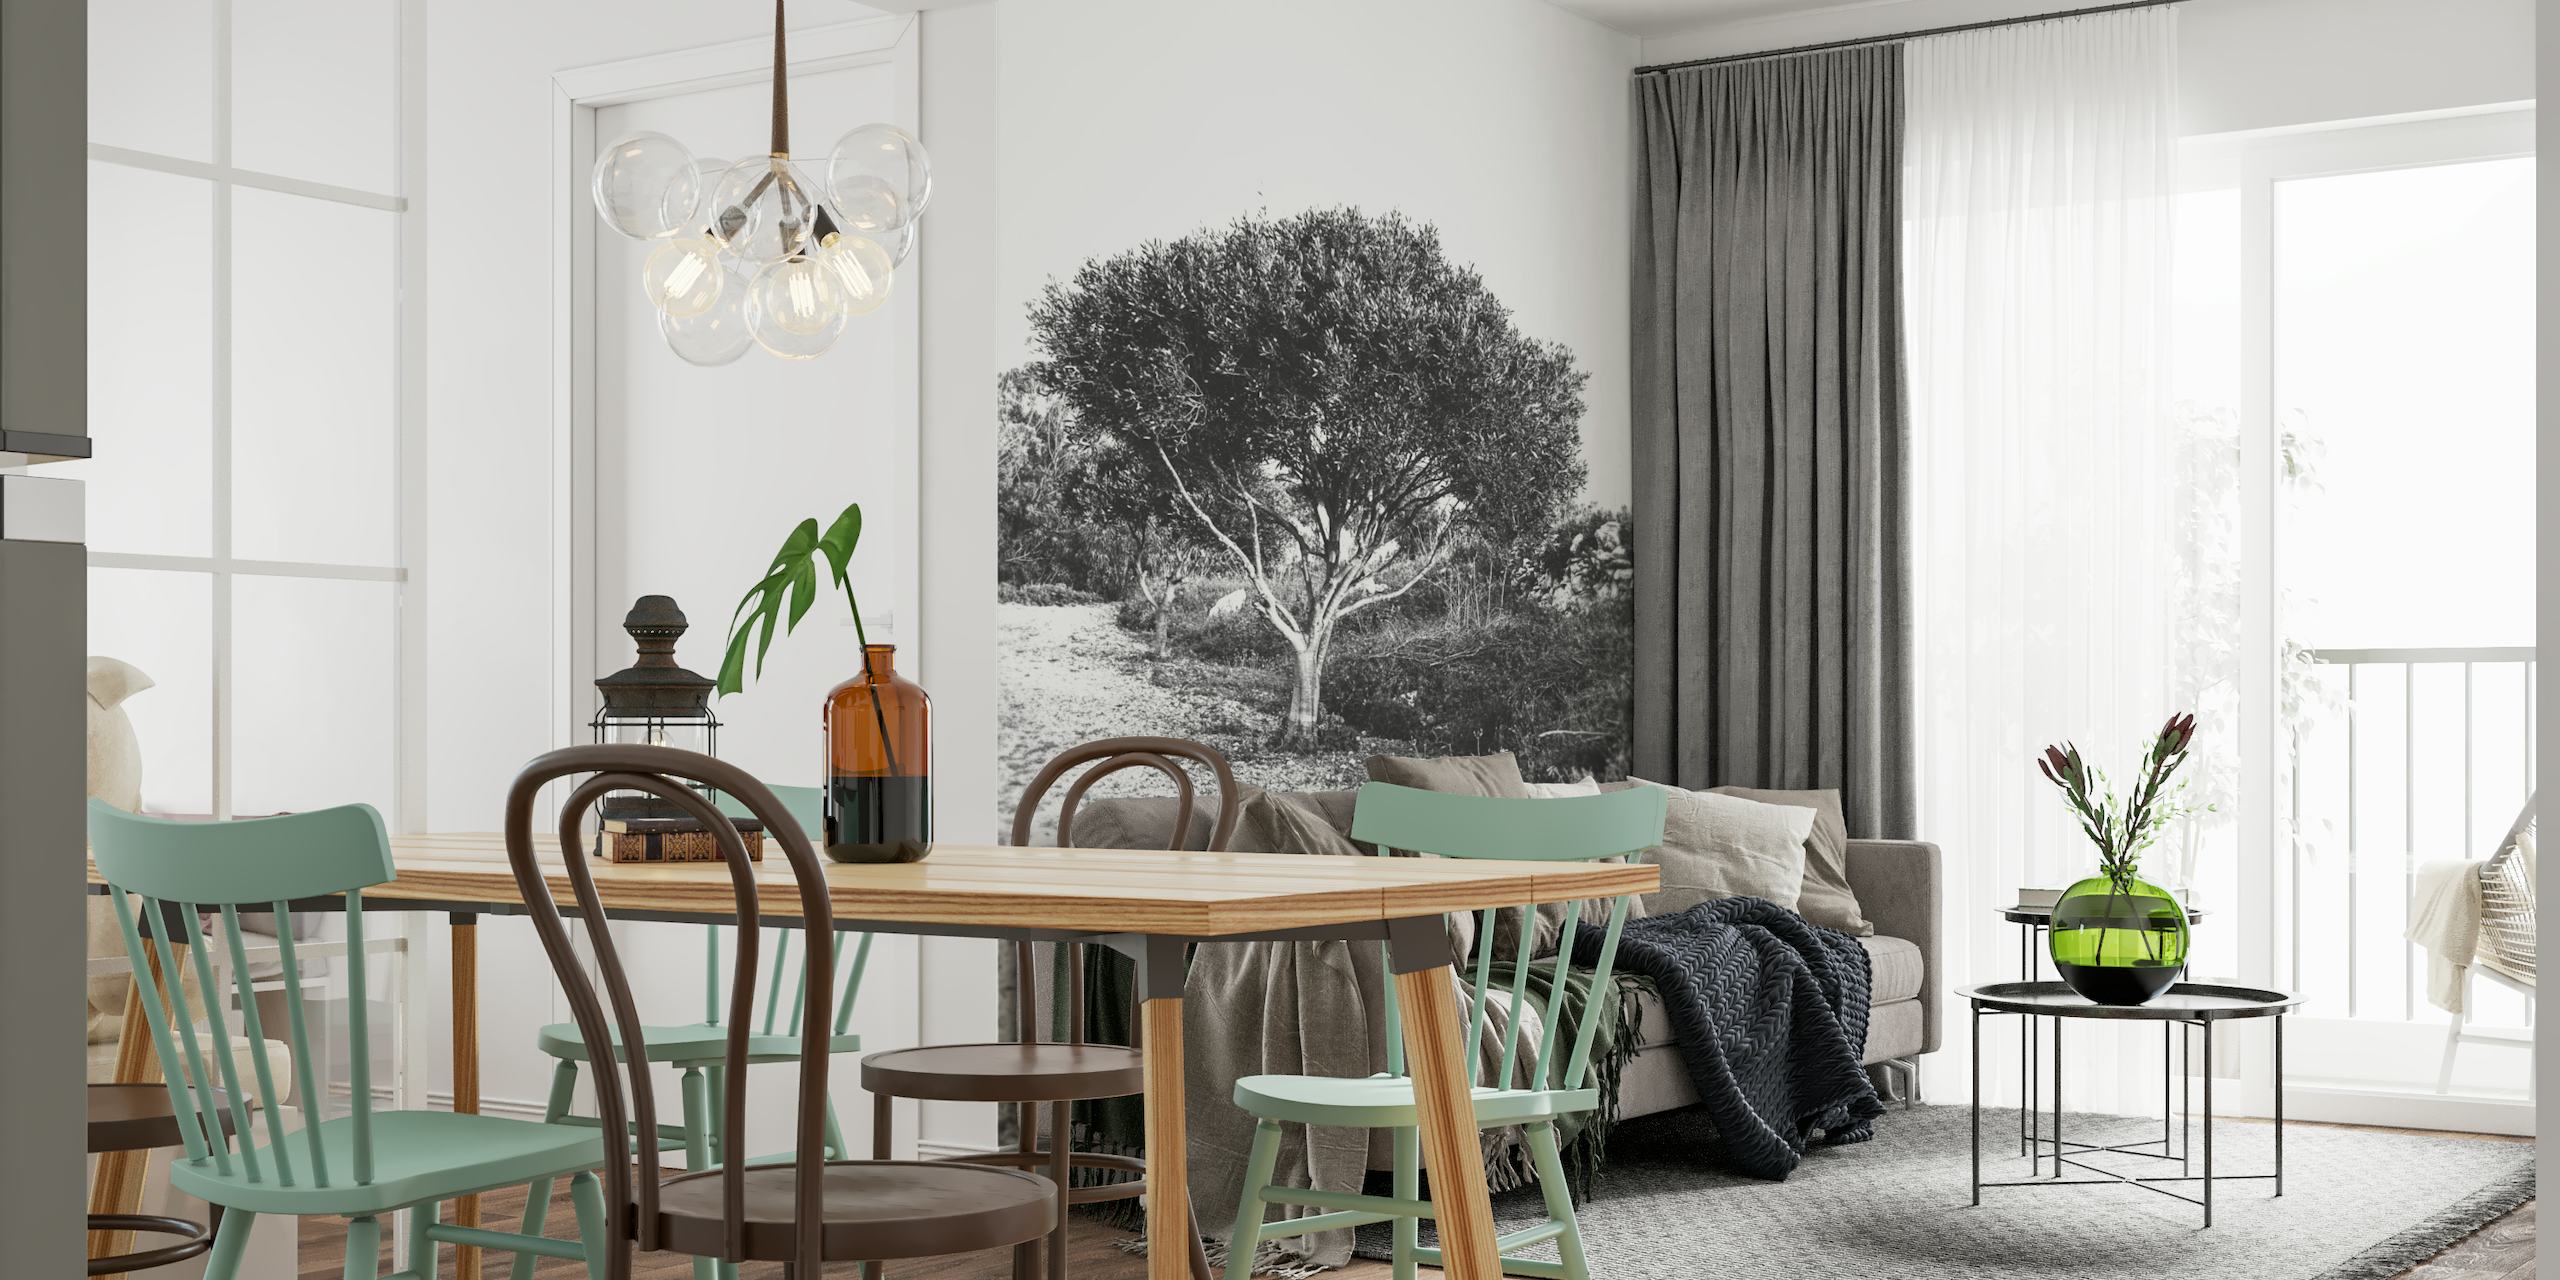 Olive Tree Garden wallpaper